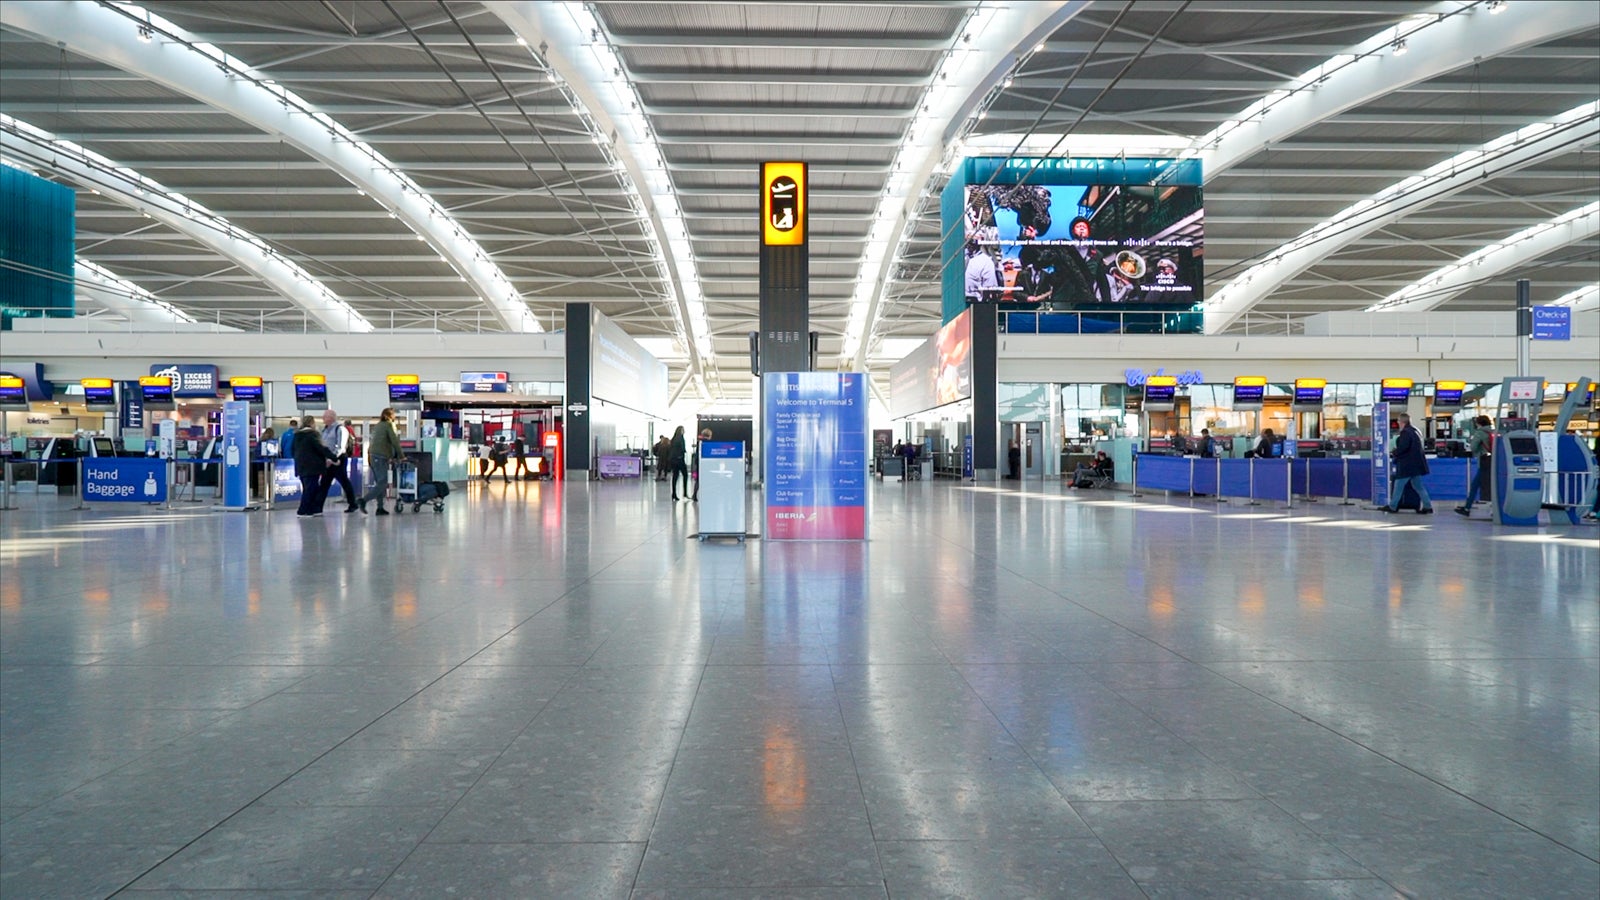 heathrow airport to london city